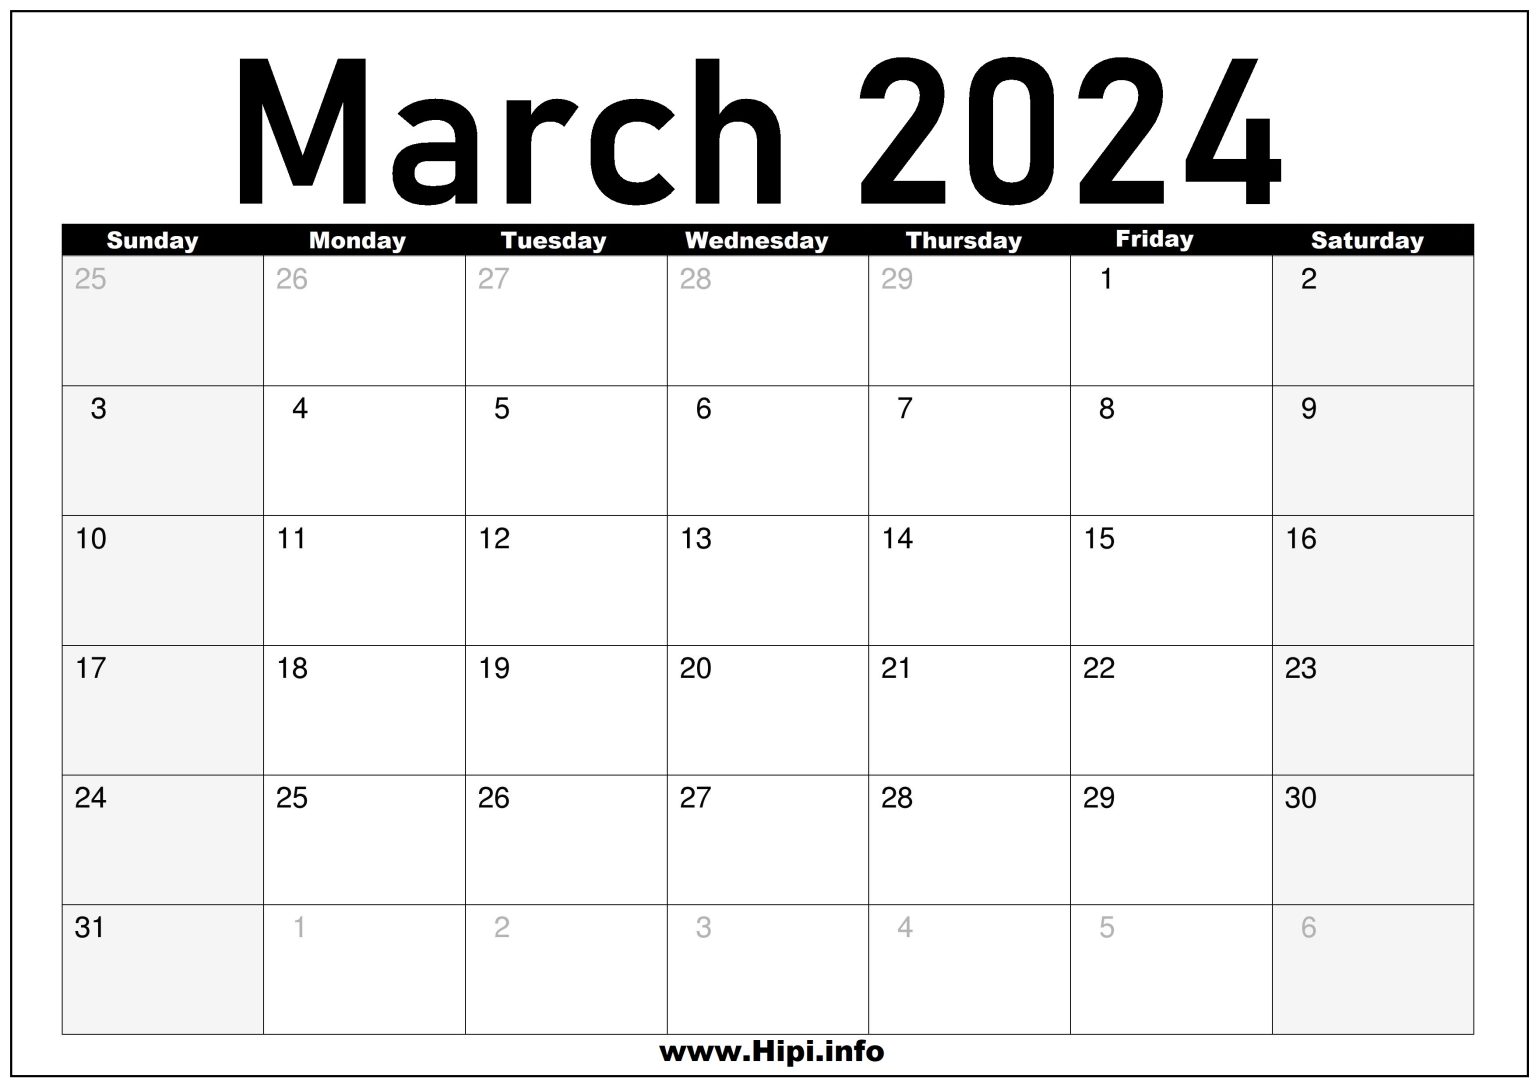 march-2024-calendar-monthly-hipi-info